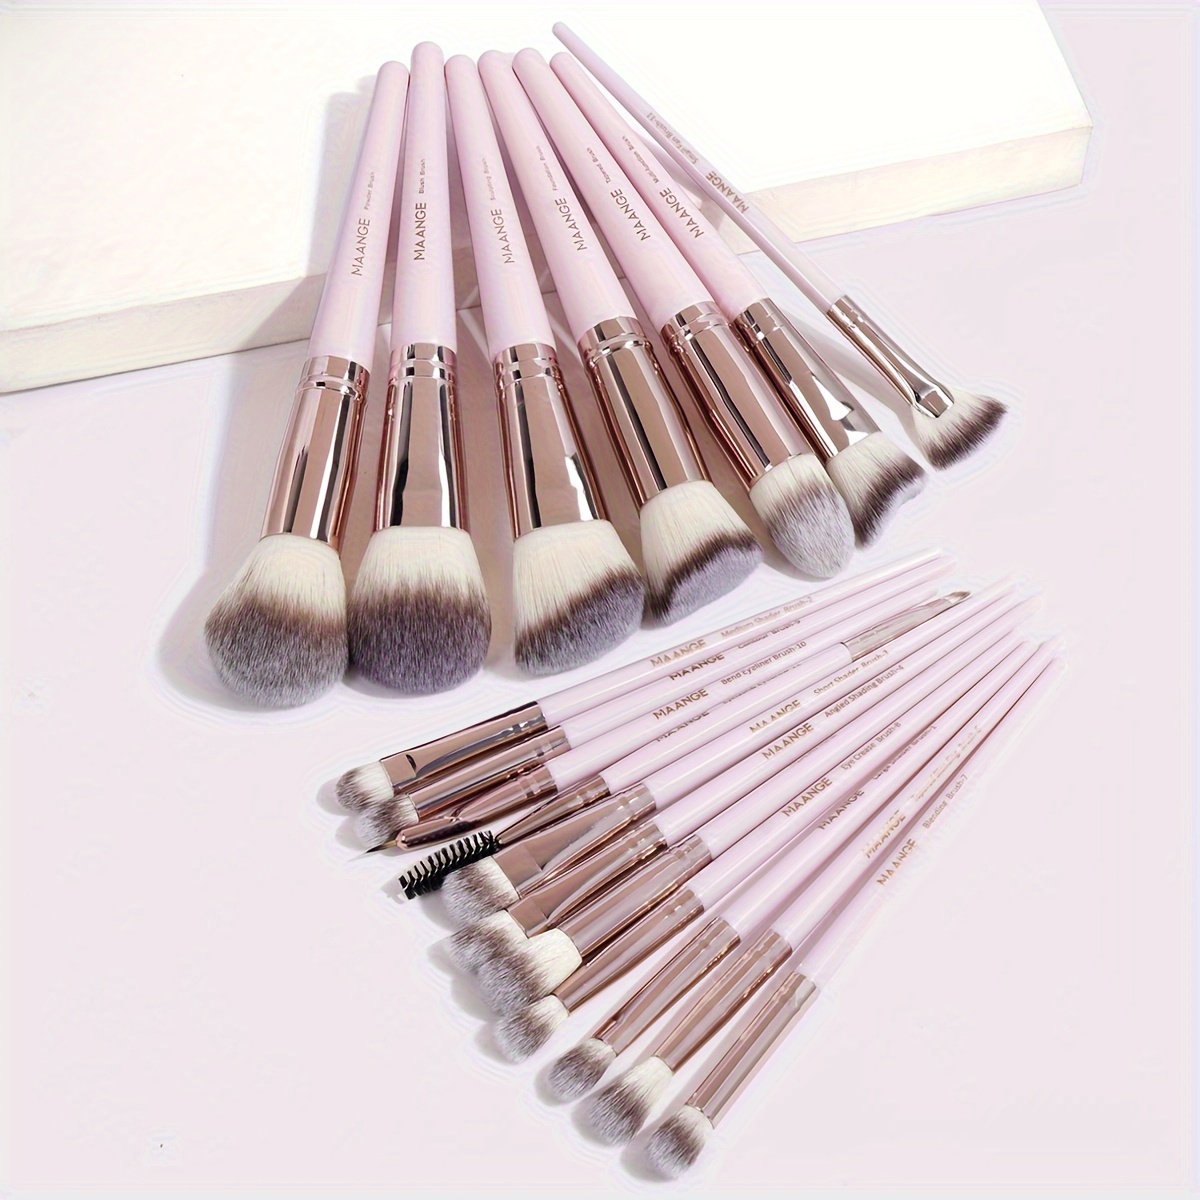 

Makeup Brushes 18pcs Makeup Brush Set Premium Synthetic Foundation Face Powder Blush Concealers Make Up Brushes Sets